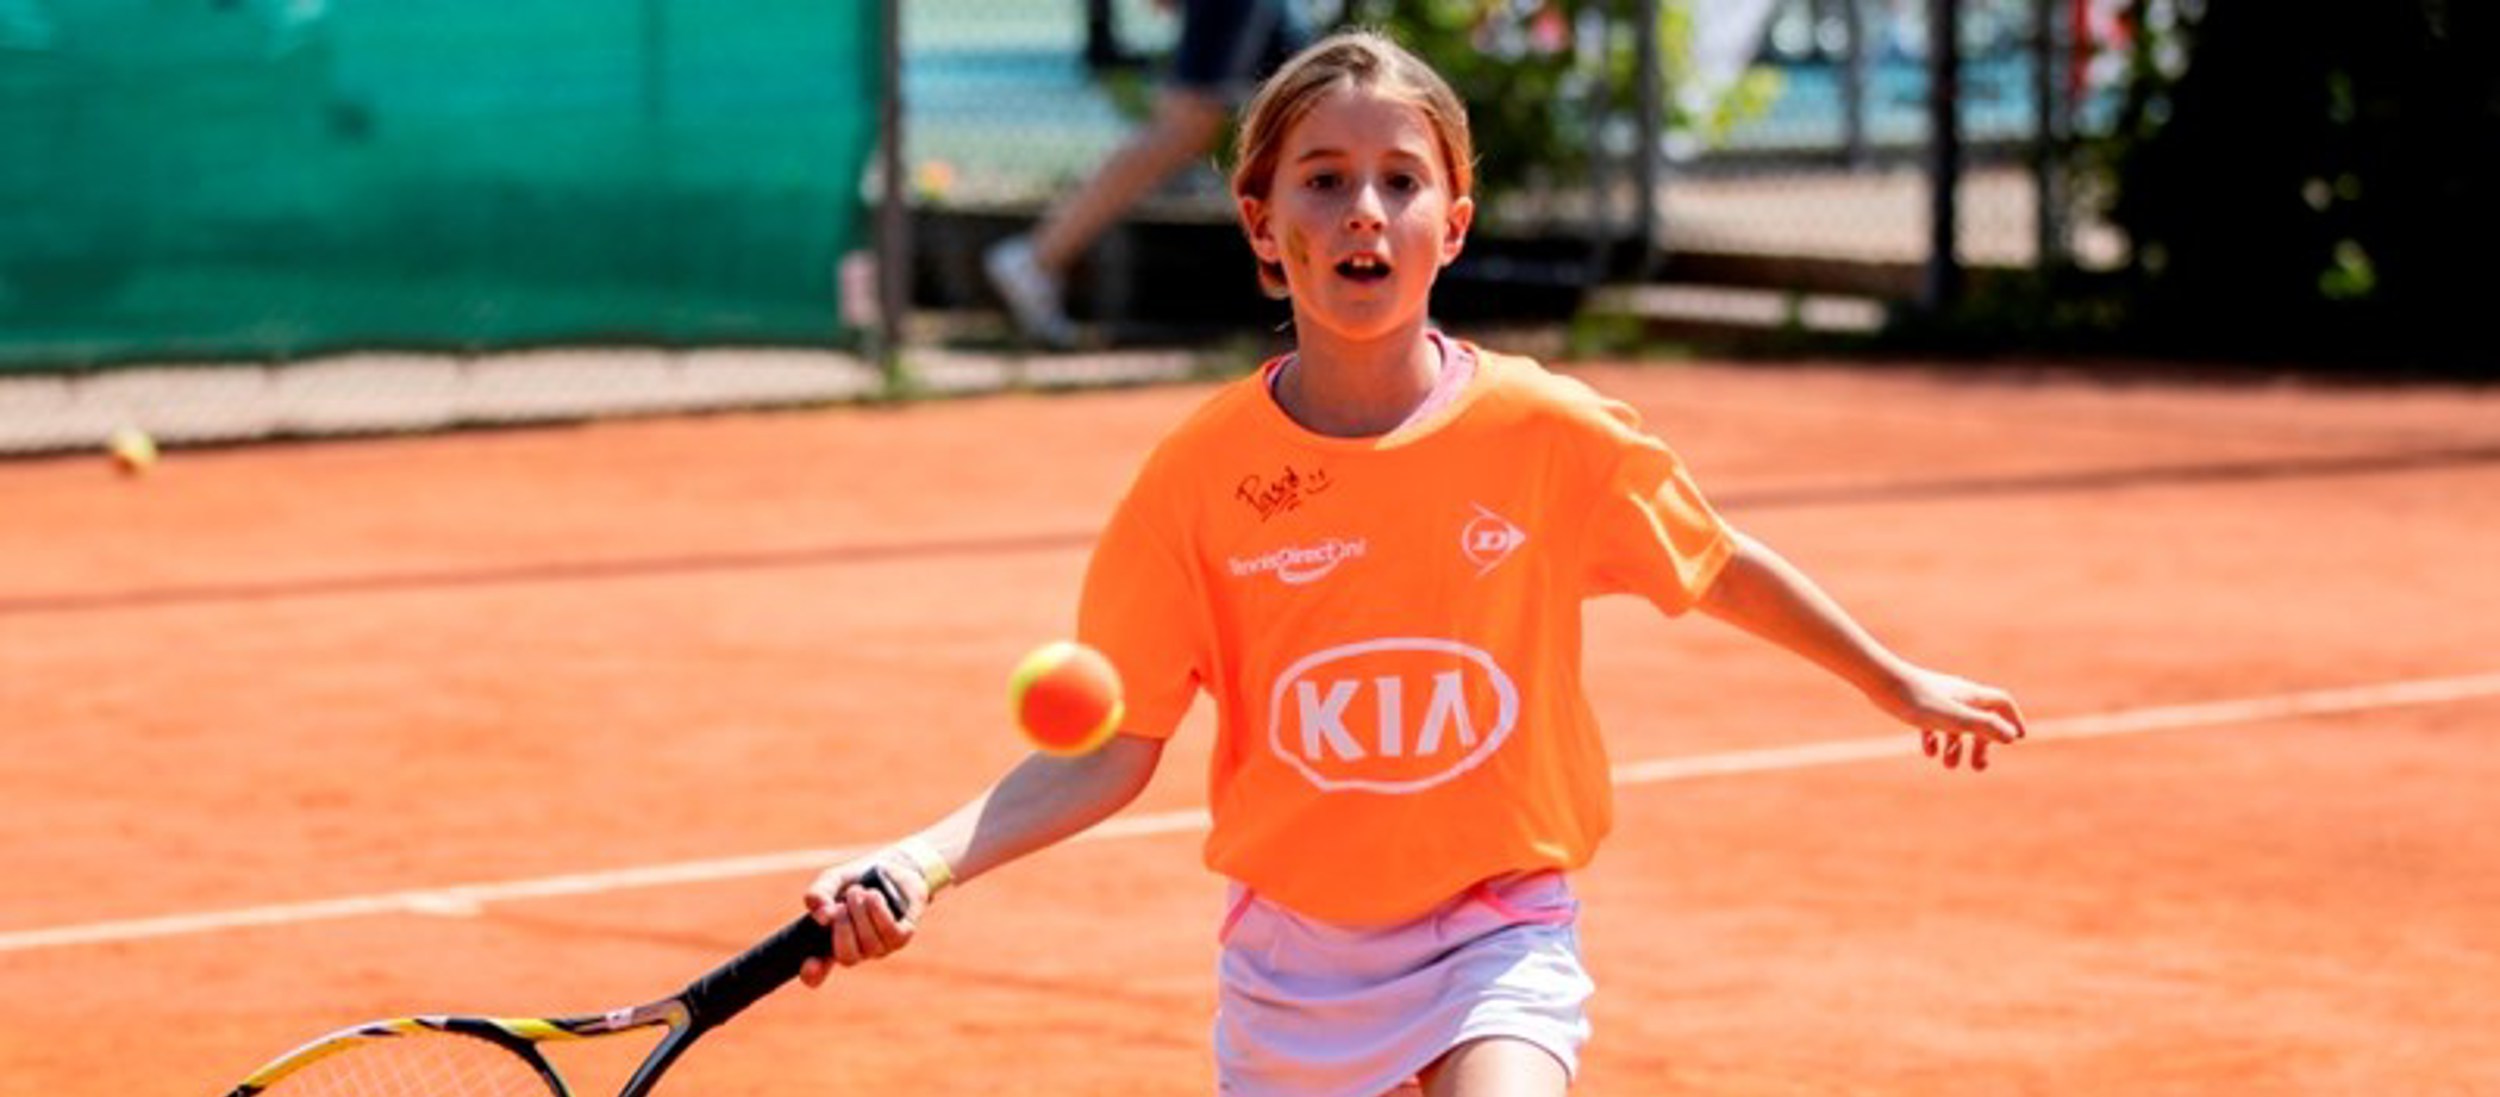 Oranje Competitie kia tennisdirect dunlop